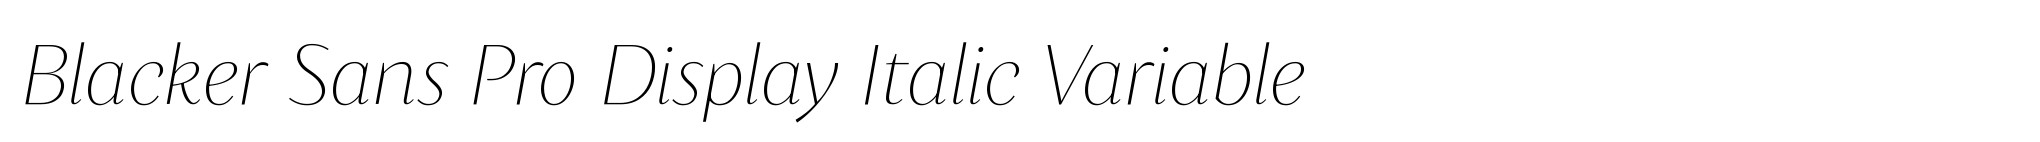 Blacker Sans Pro Display Italic Variable image